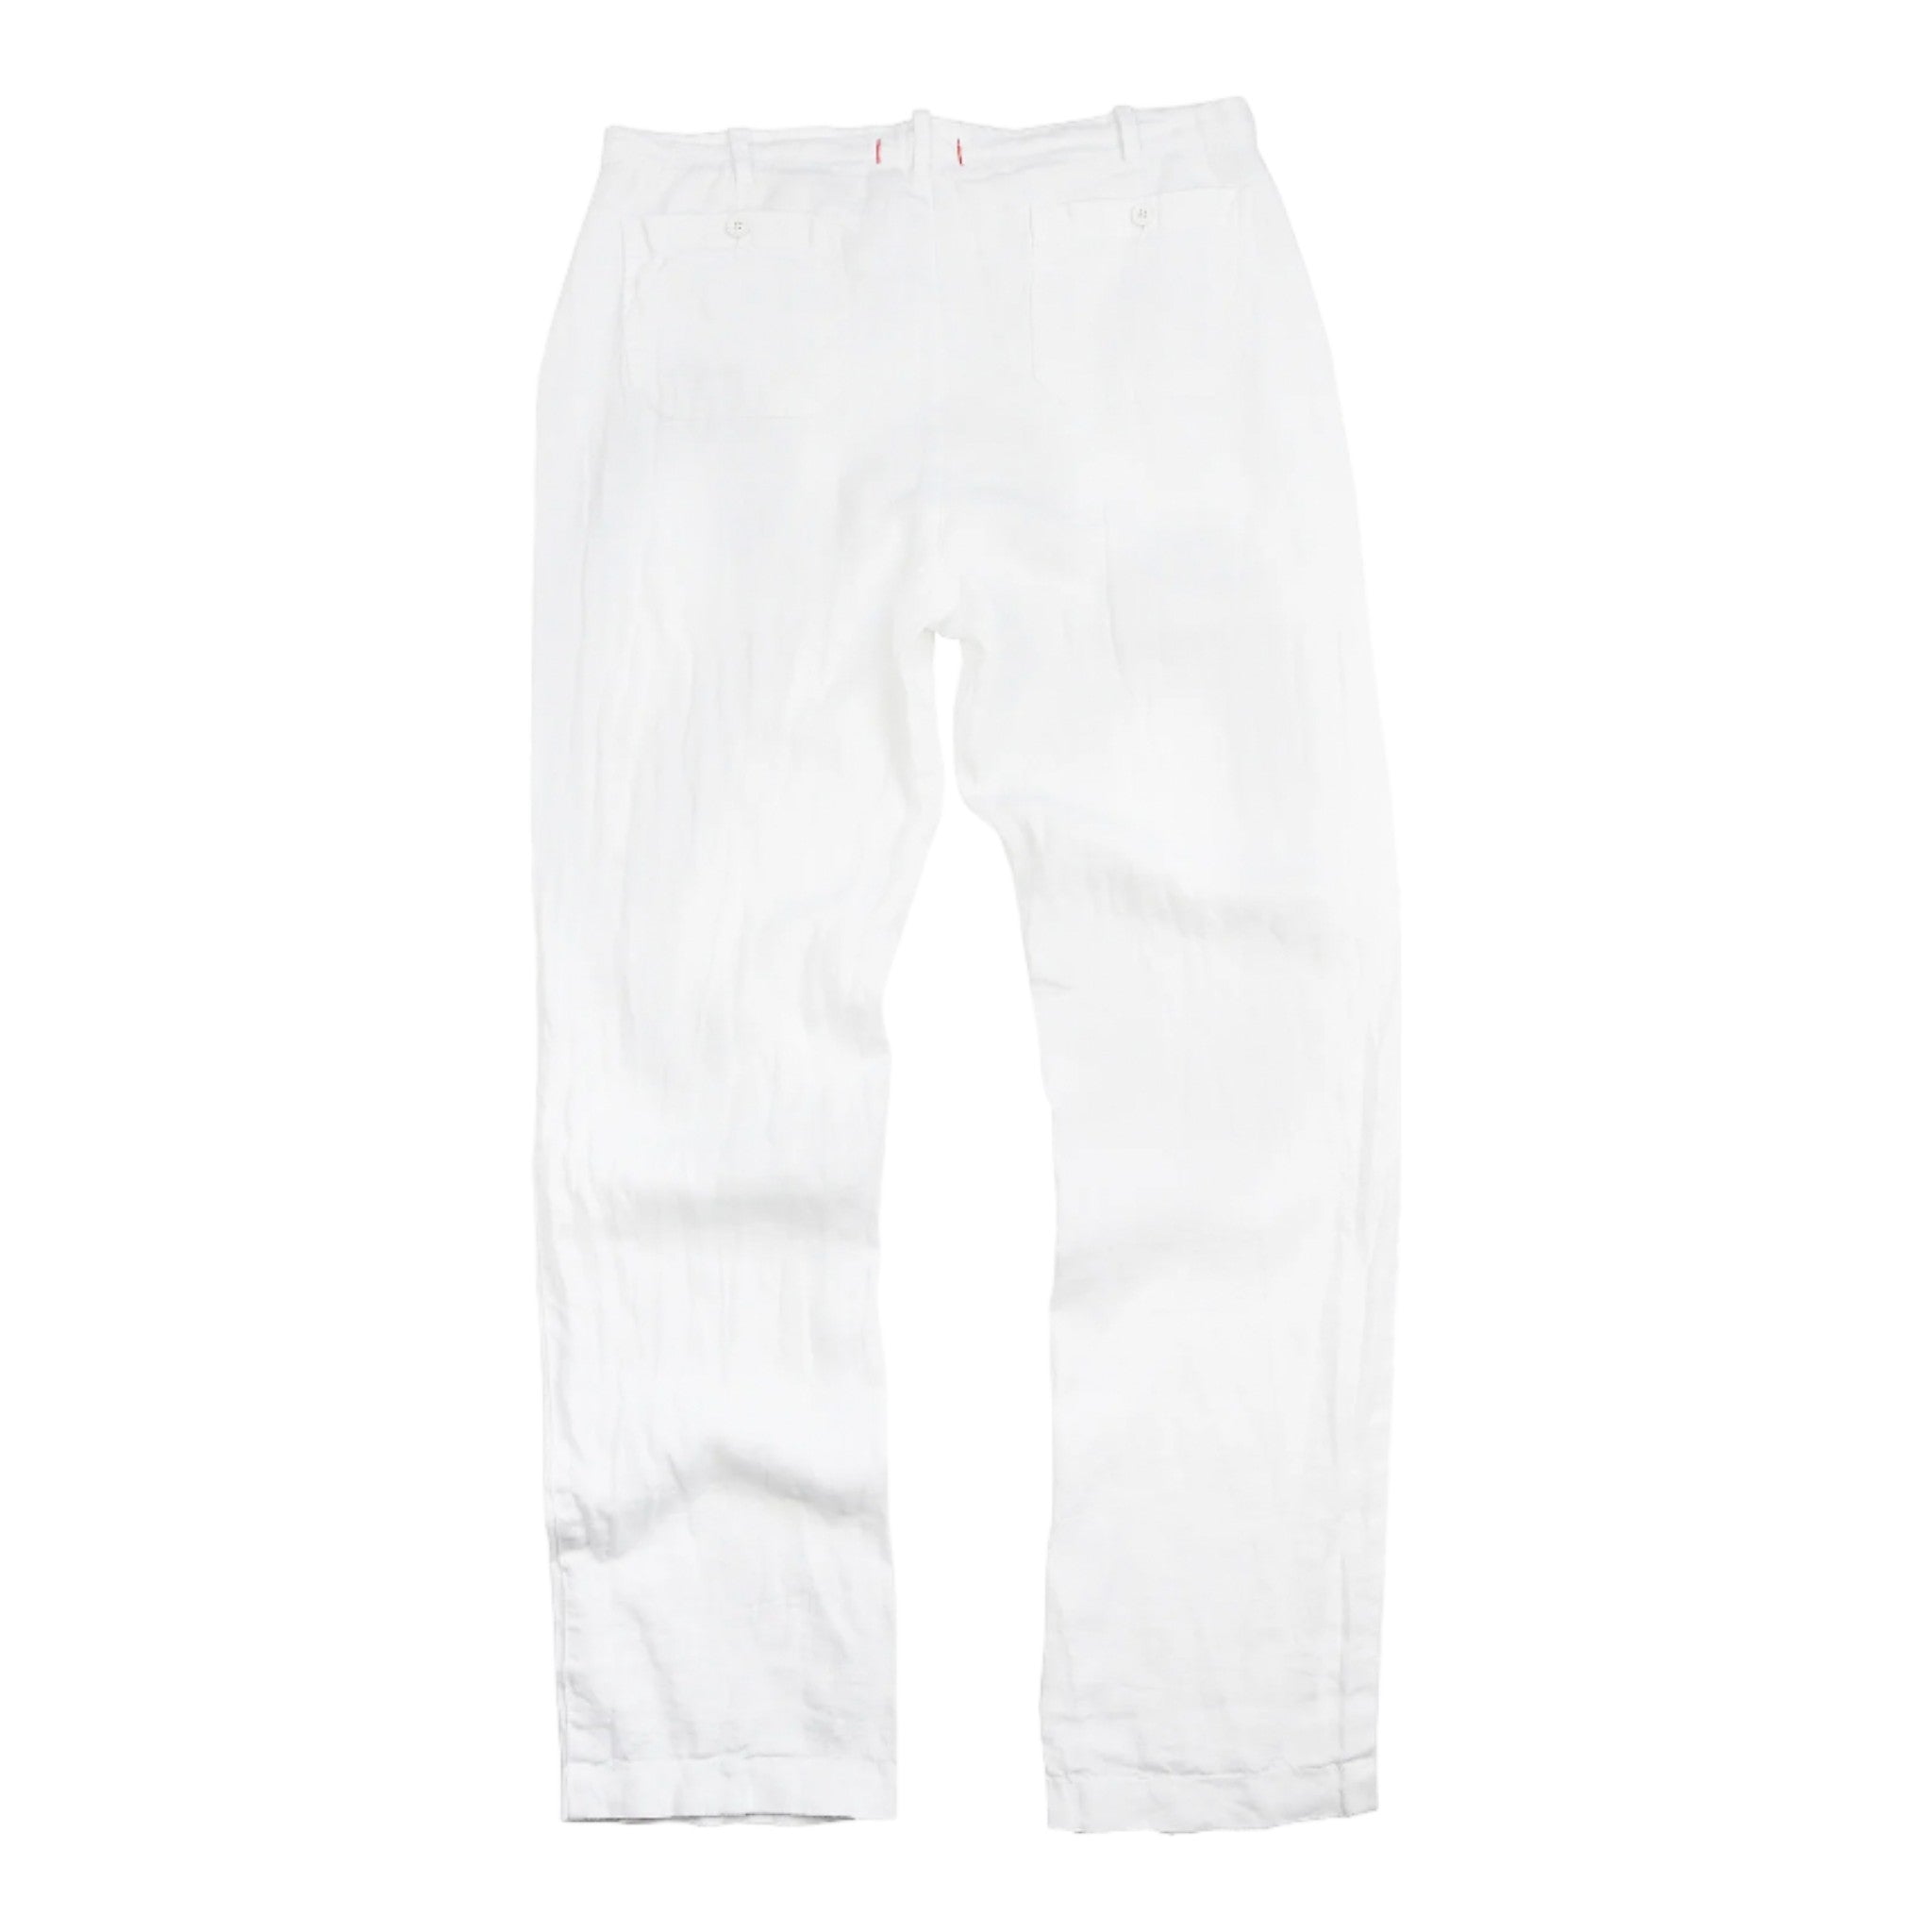 Benson - Key West Linen Pant - White